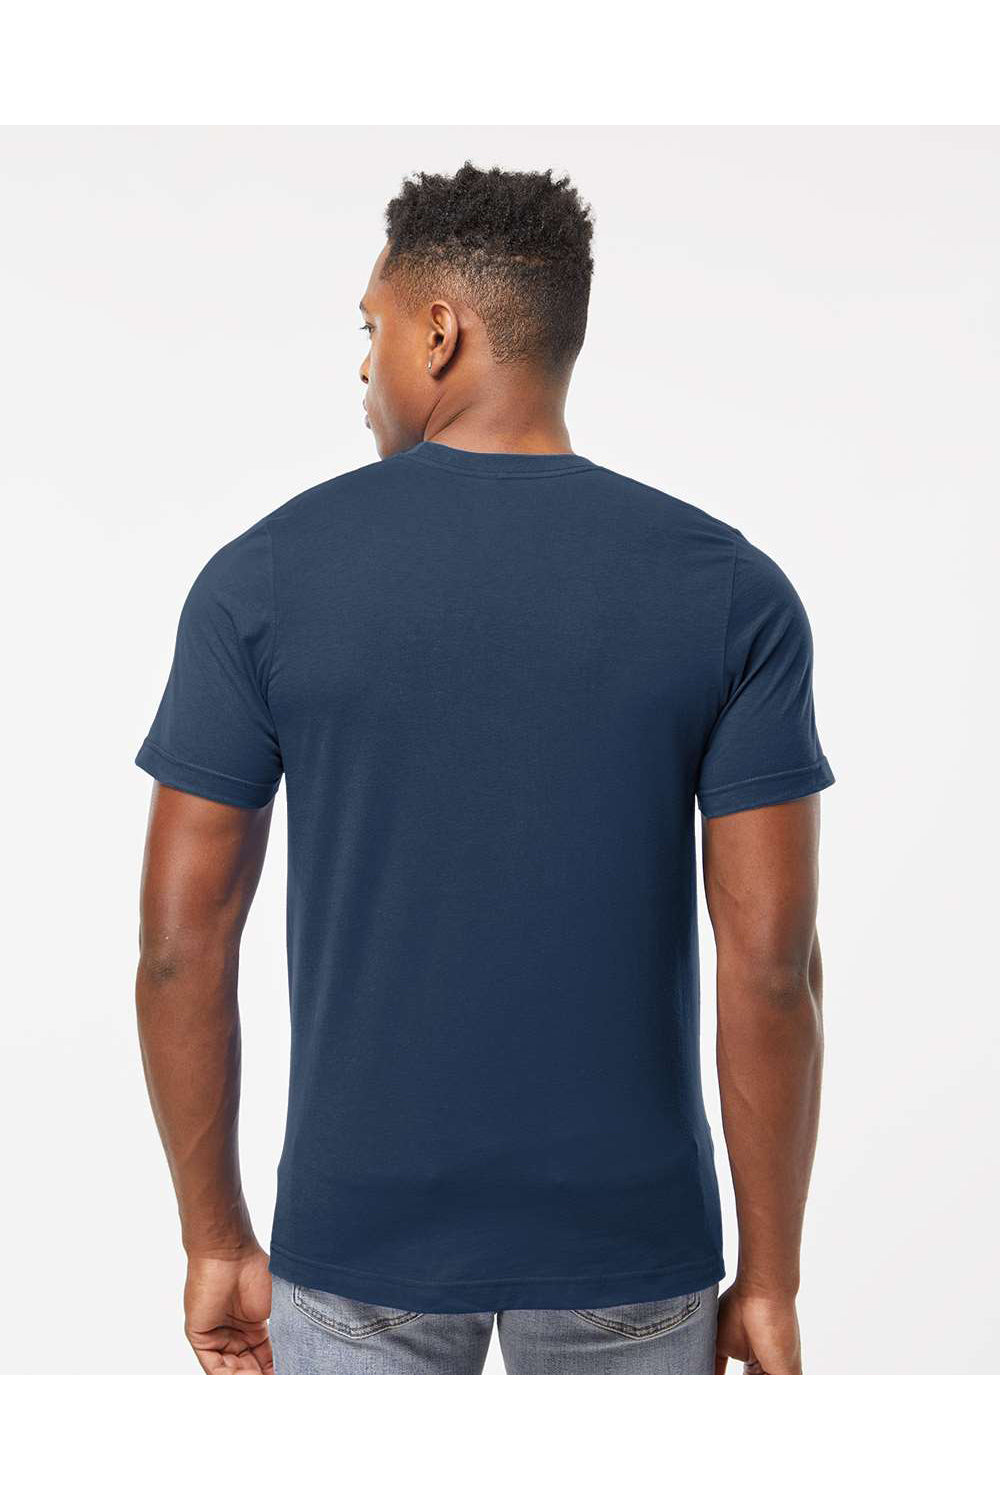 Tultex 602 Mens Short Sleeve Crewneck T-Shirt Navy Blue Model Back